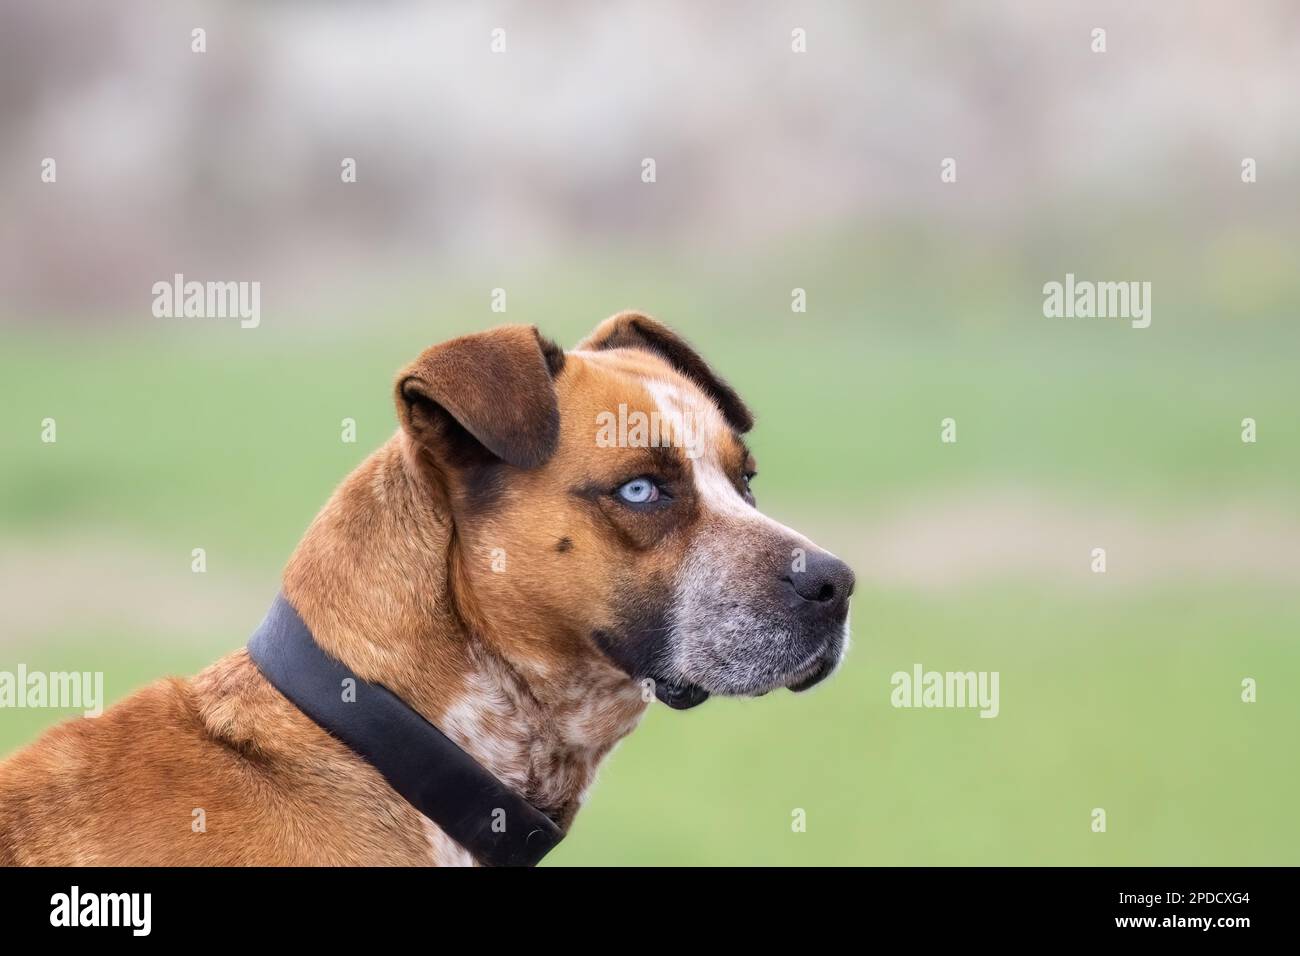 Close-up portrait of boxer husky dog with blue eyes isolated on blurry background Stock Photo